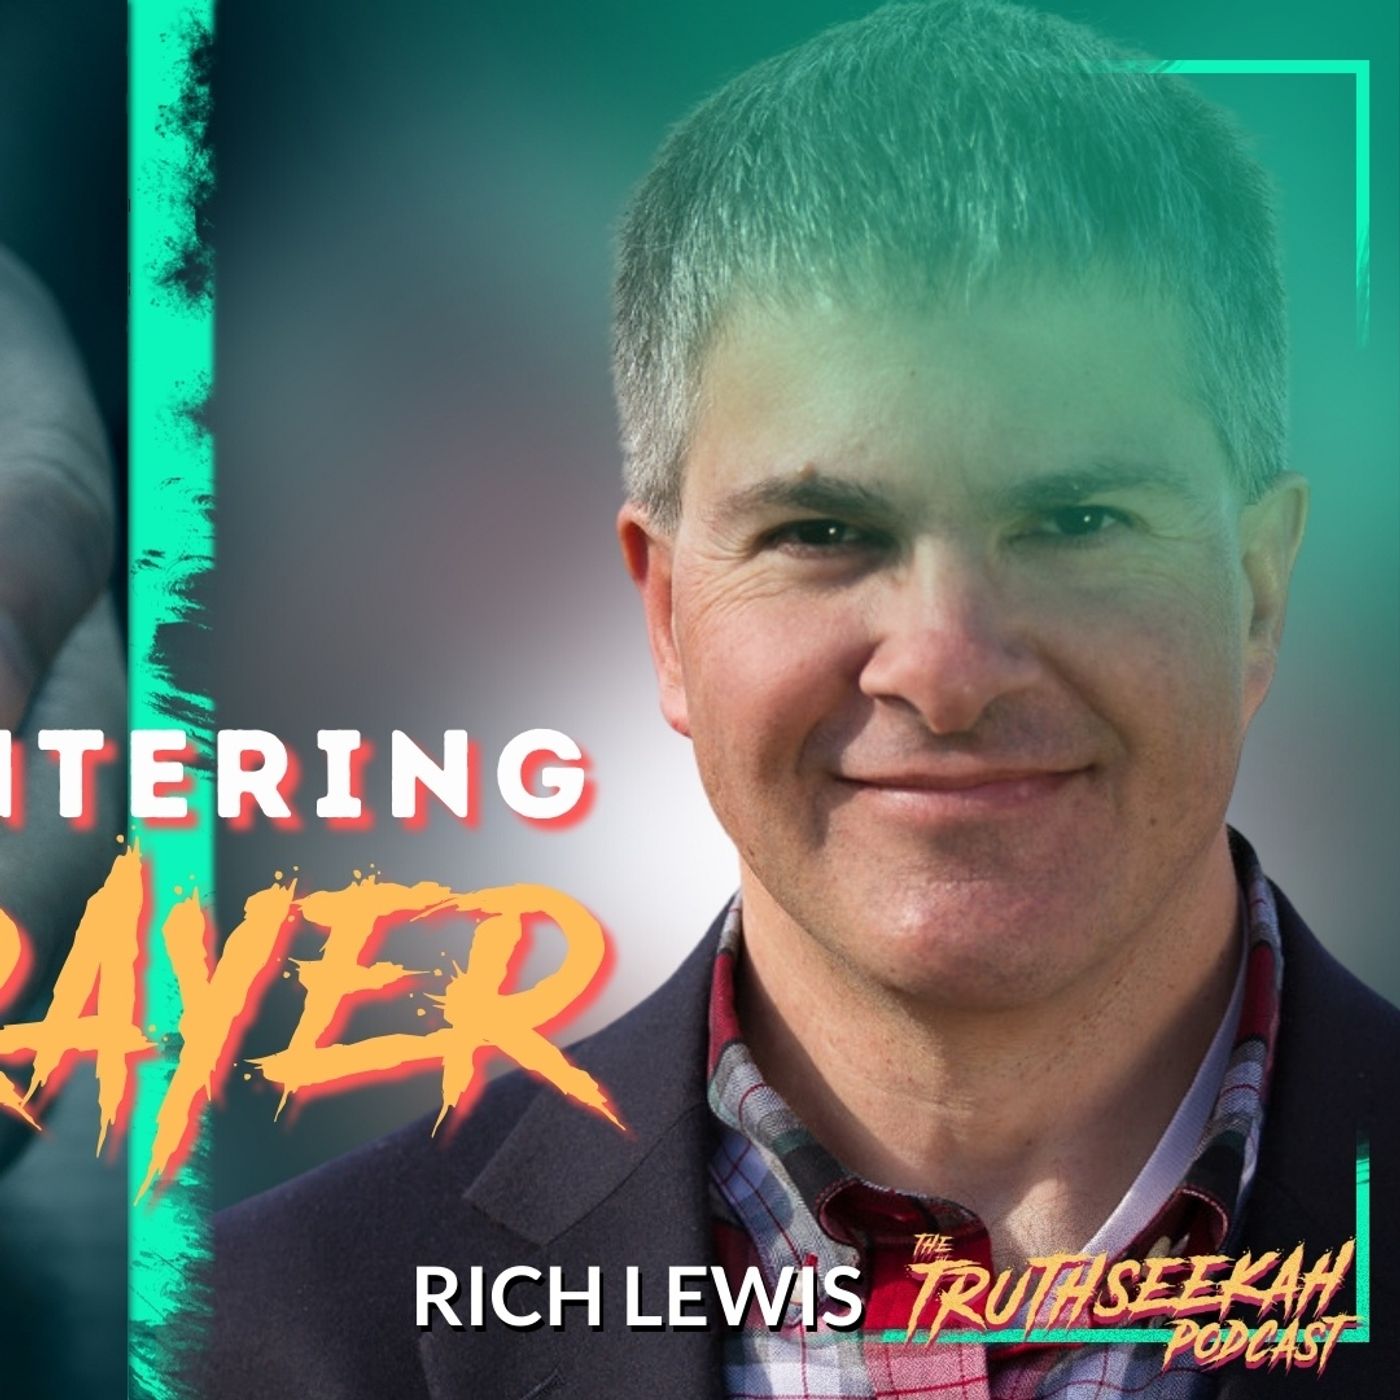 How To Encounter God Through Prayer - Rich Lewis